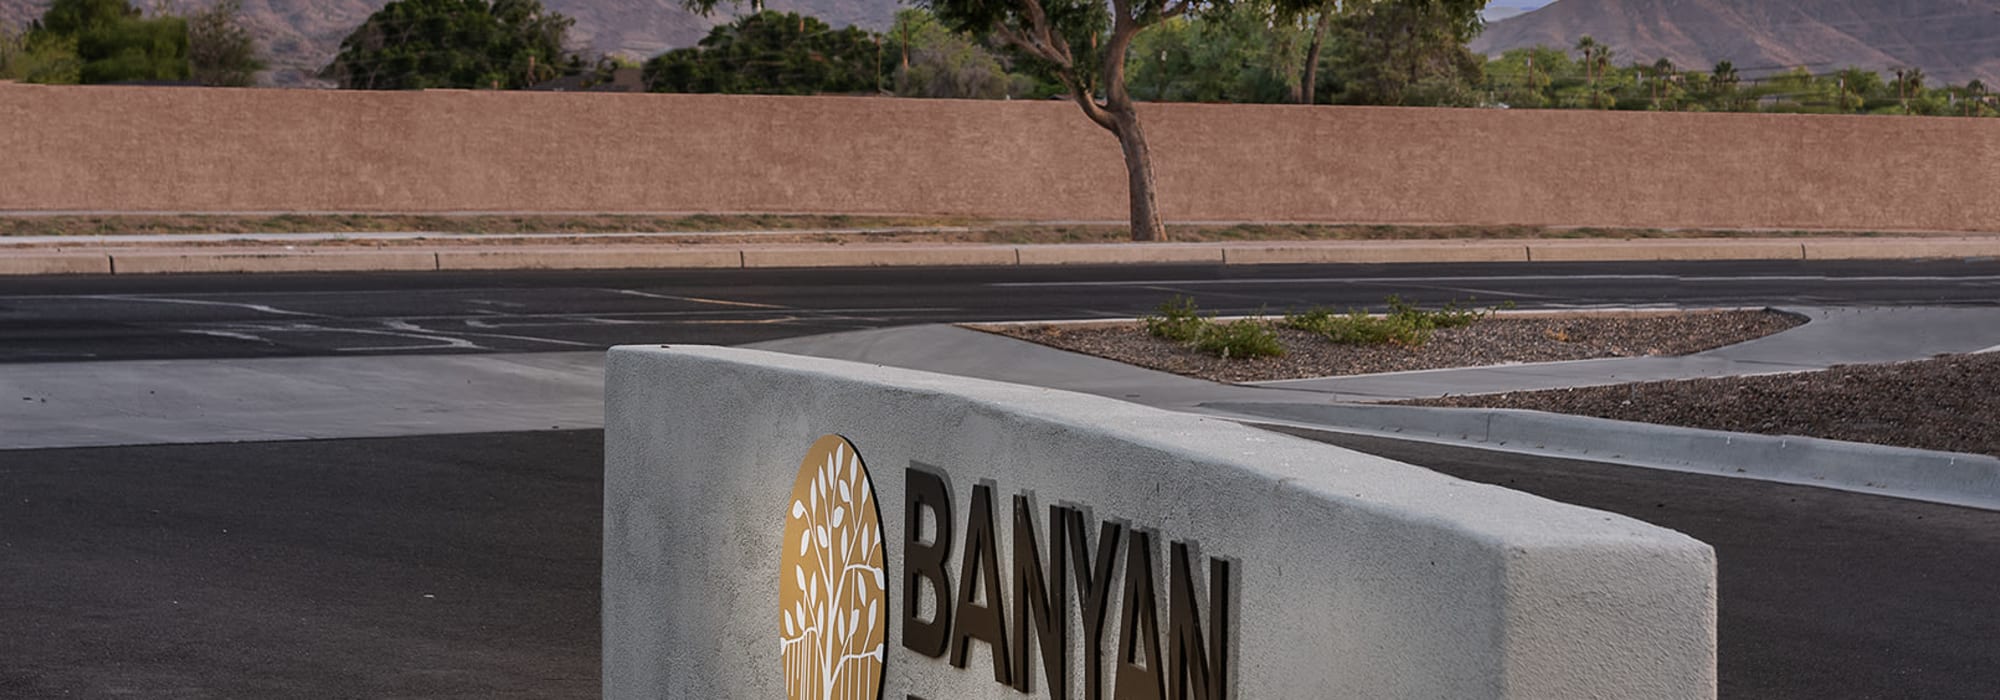 Entrance Sign at Banyan Preserve in Phoenix, Arizona